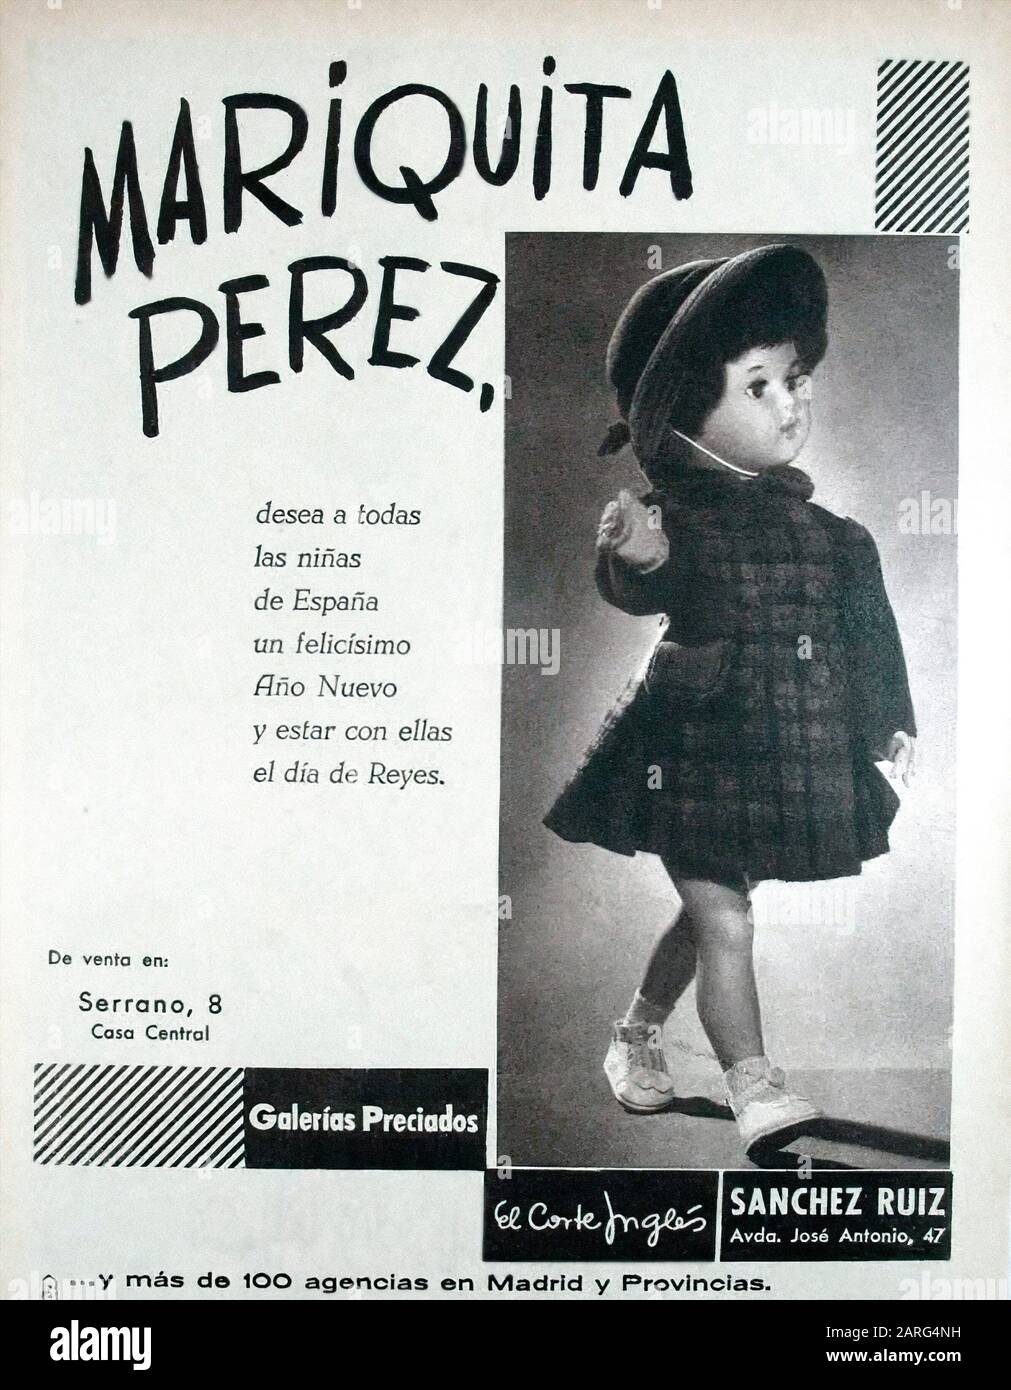 Mariquita perez hi-res stock photography and images - Alamy